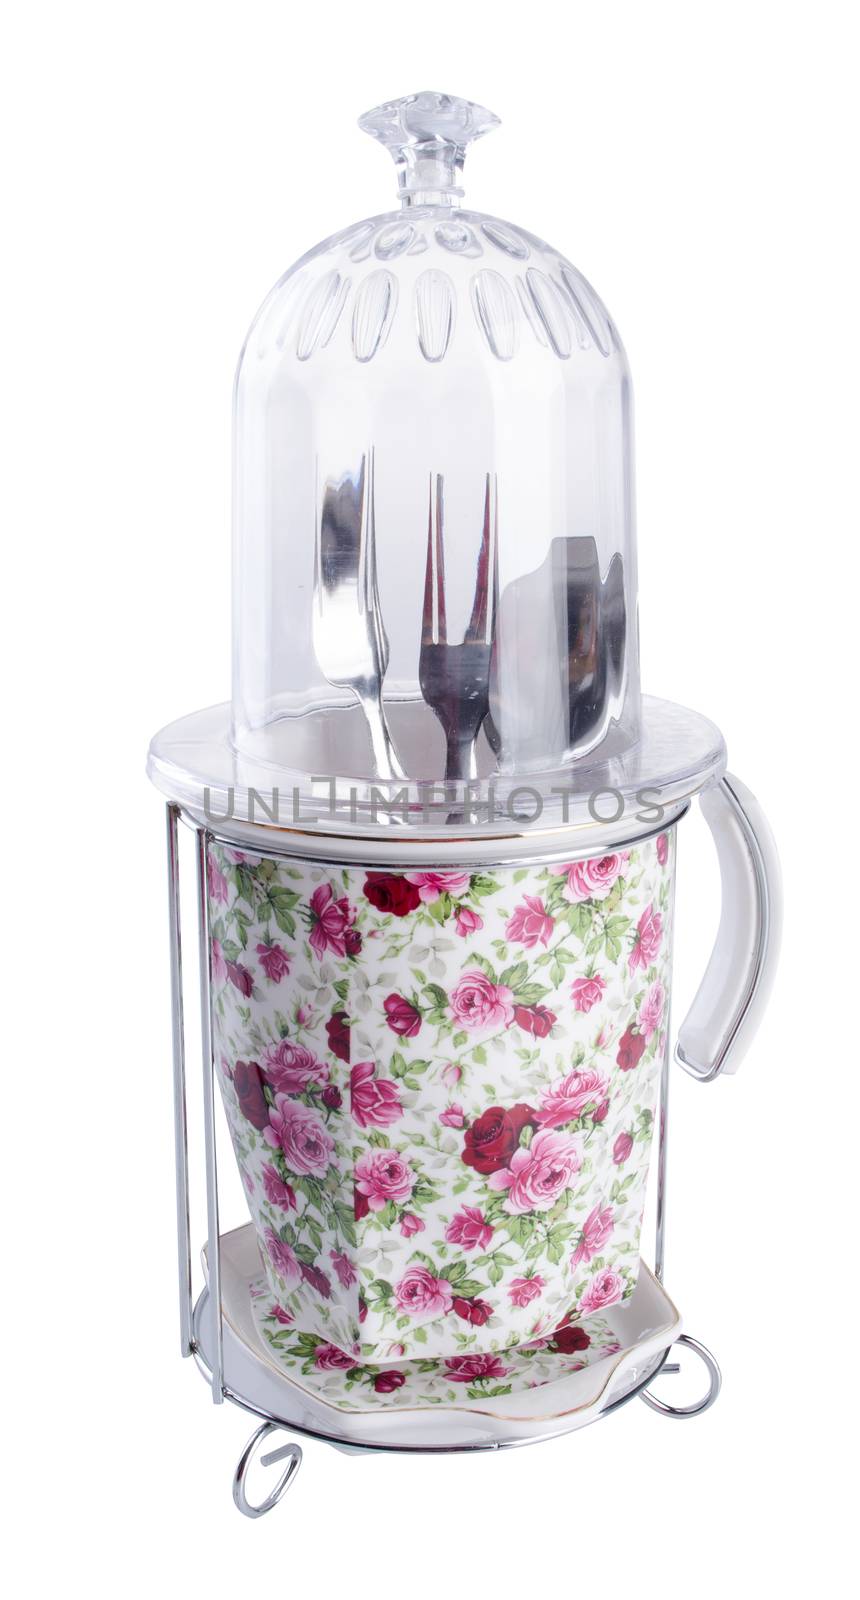 Kitchen utensils holder. Kitchen utensils holder on background